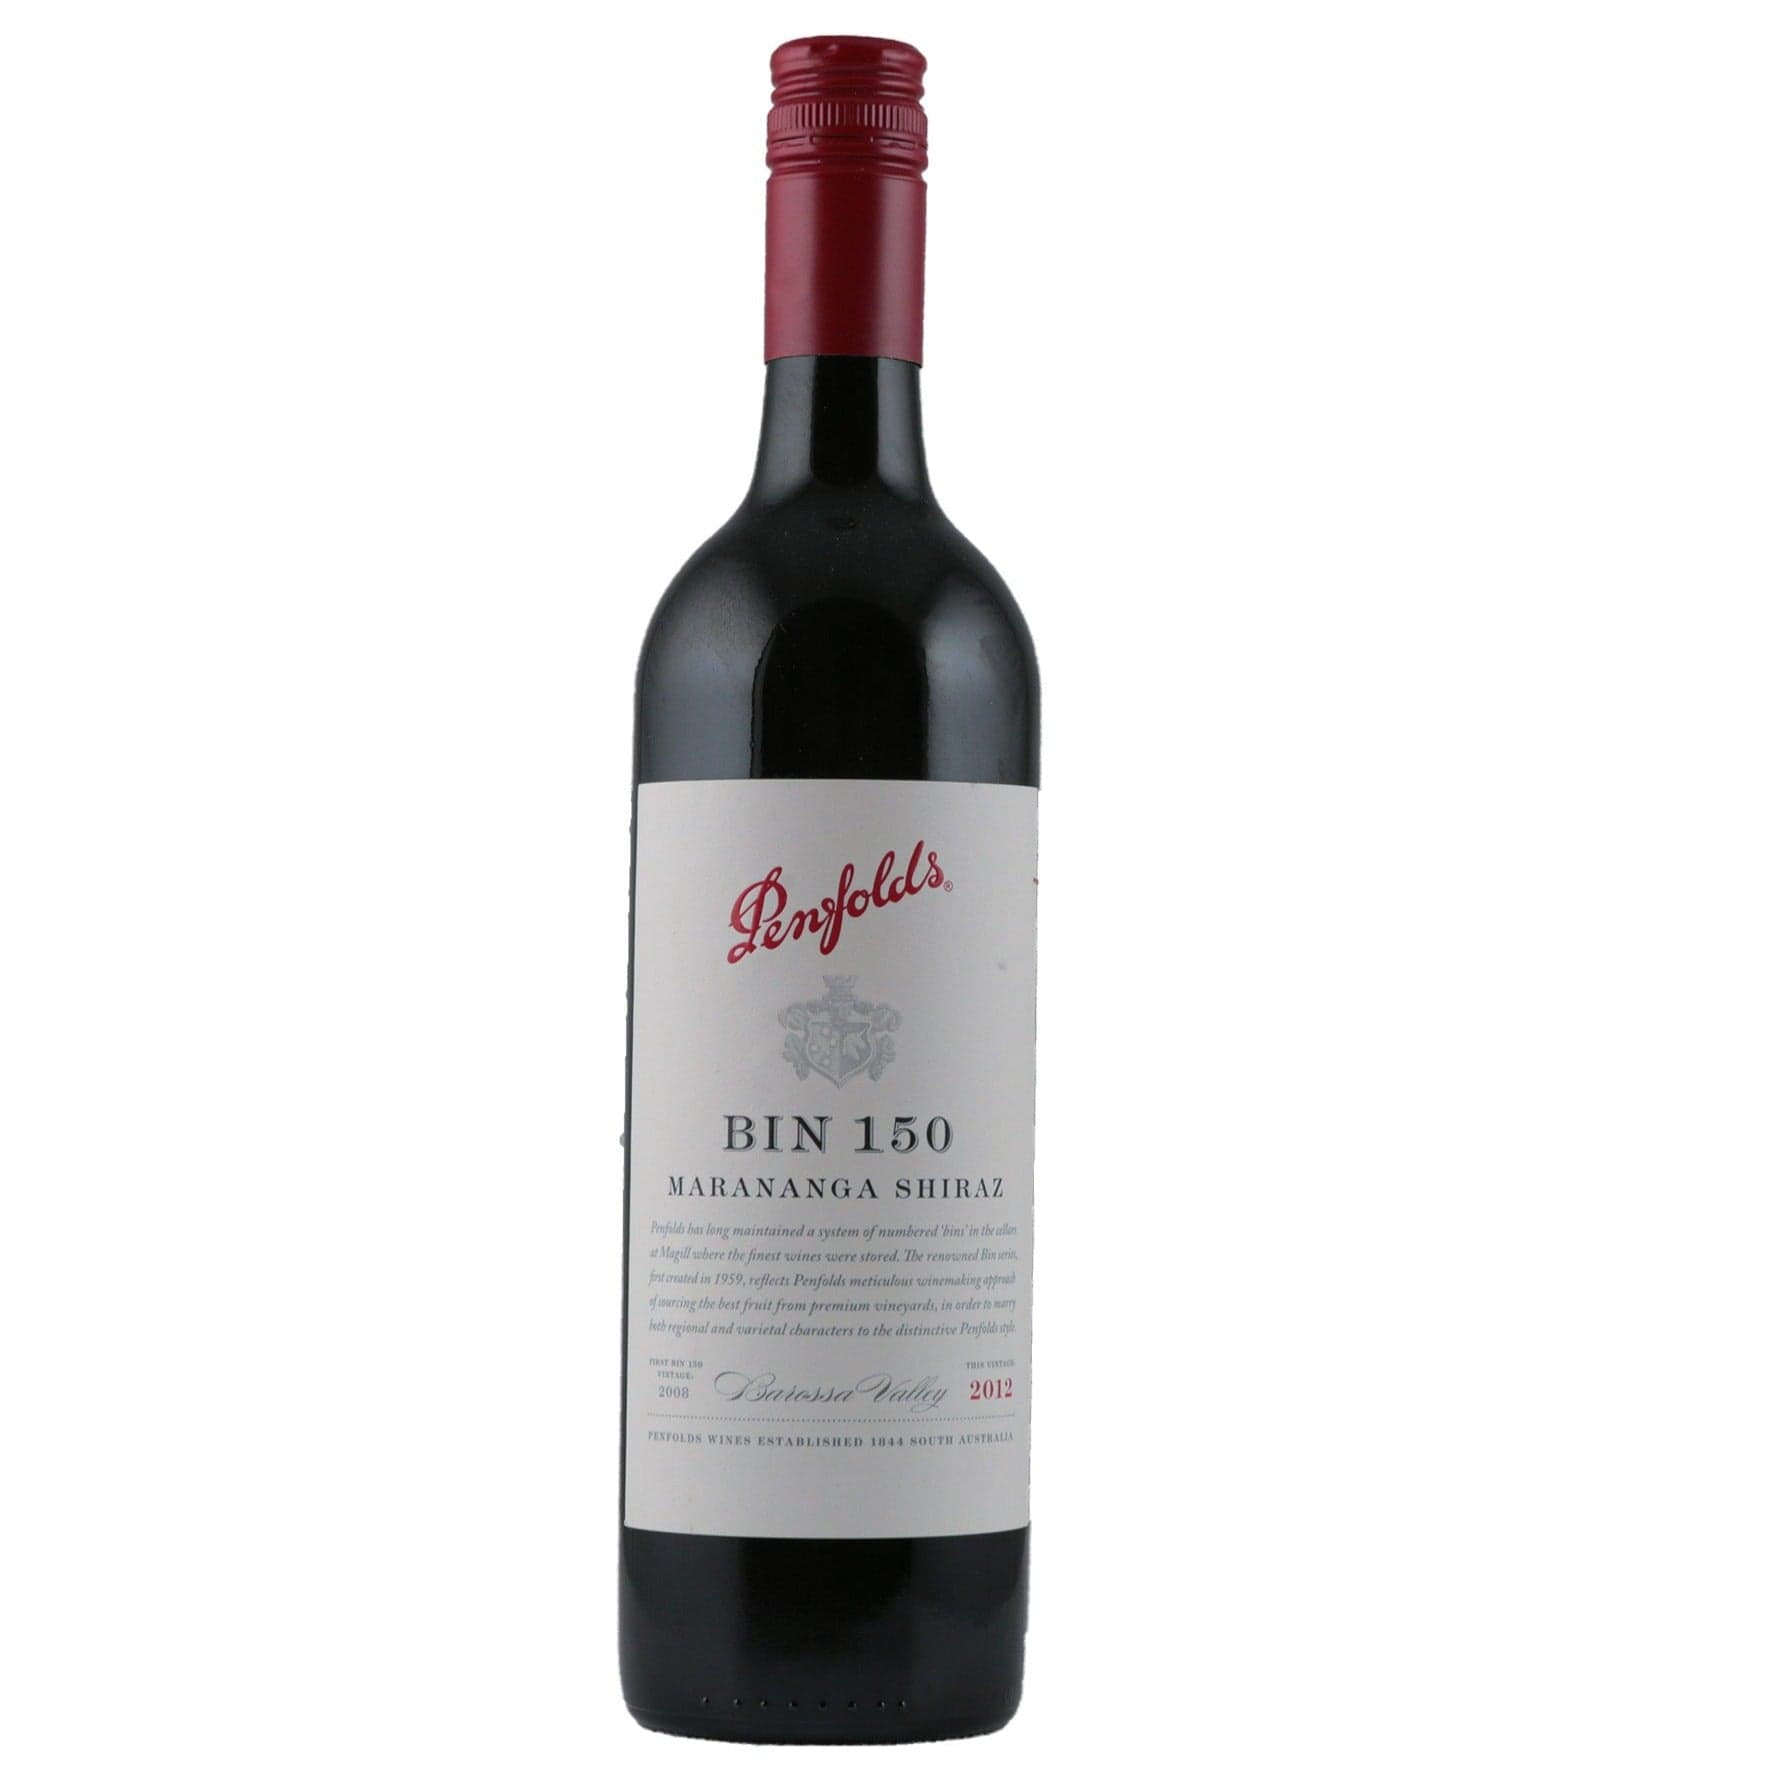 Single bottle of Red wine Penfolds, Bin 150 Marananga Shiraz Barossa Valley, 2012 100% Shiraz